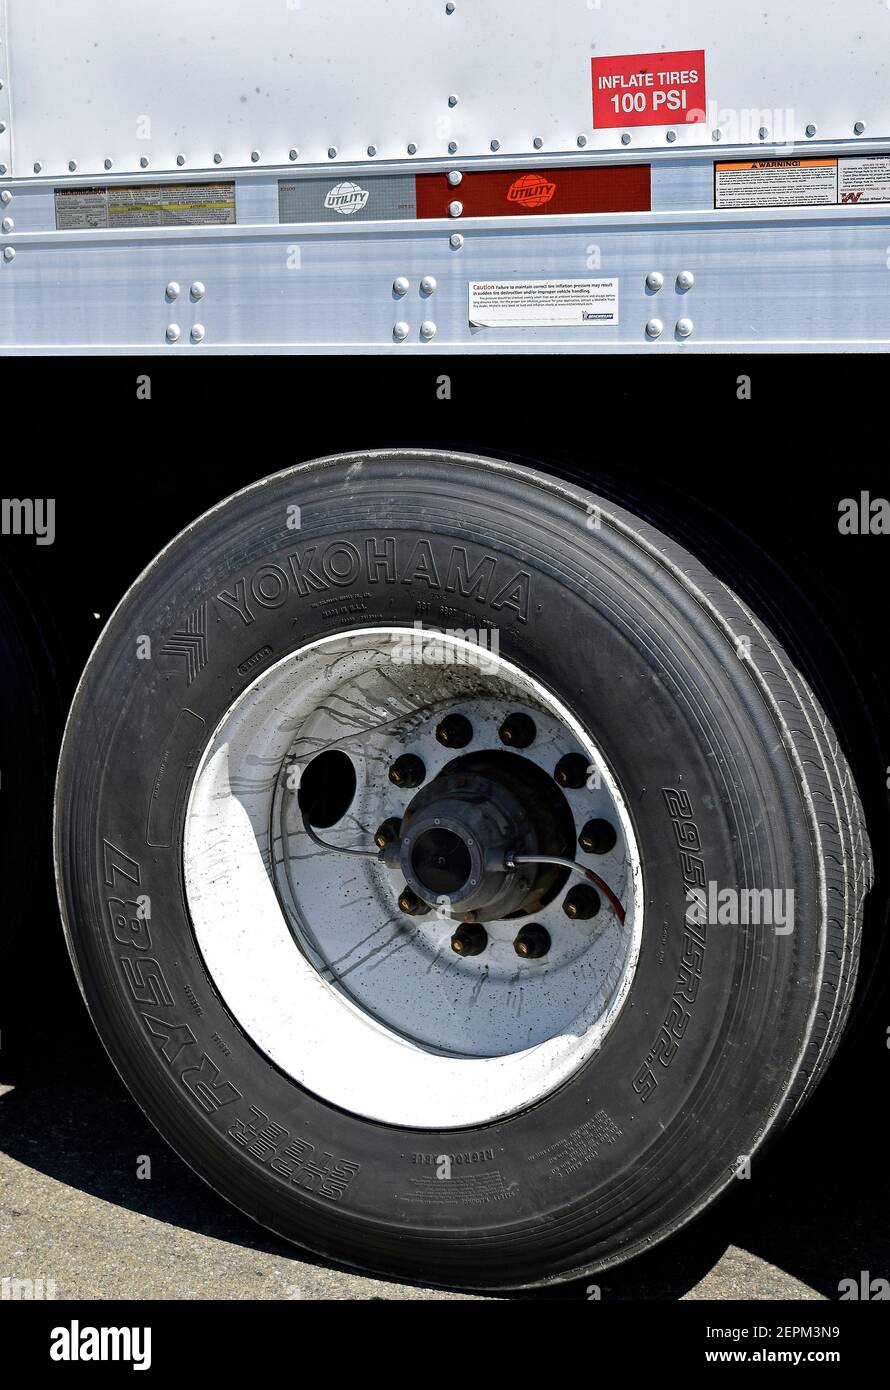 Yokohama truck tire, inflate tires 100 PSI, California Stock Photo